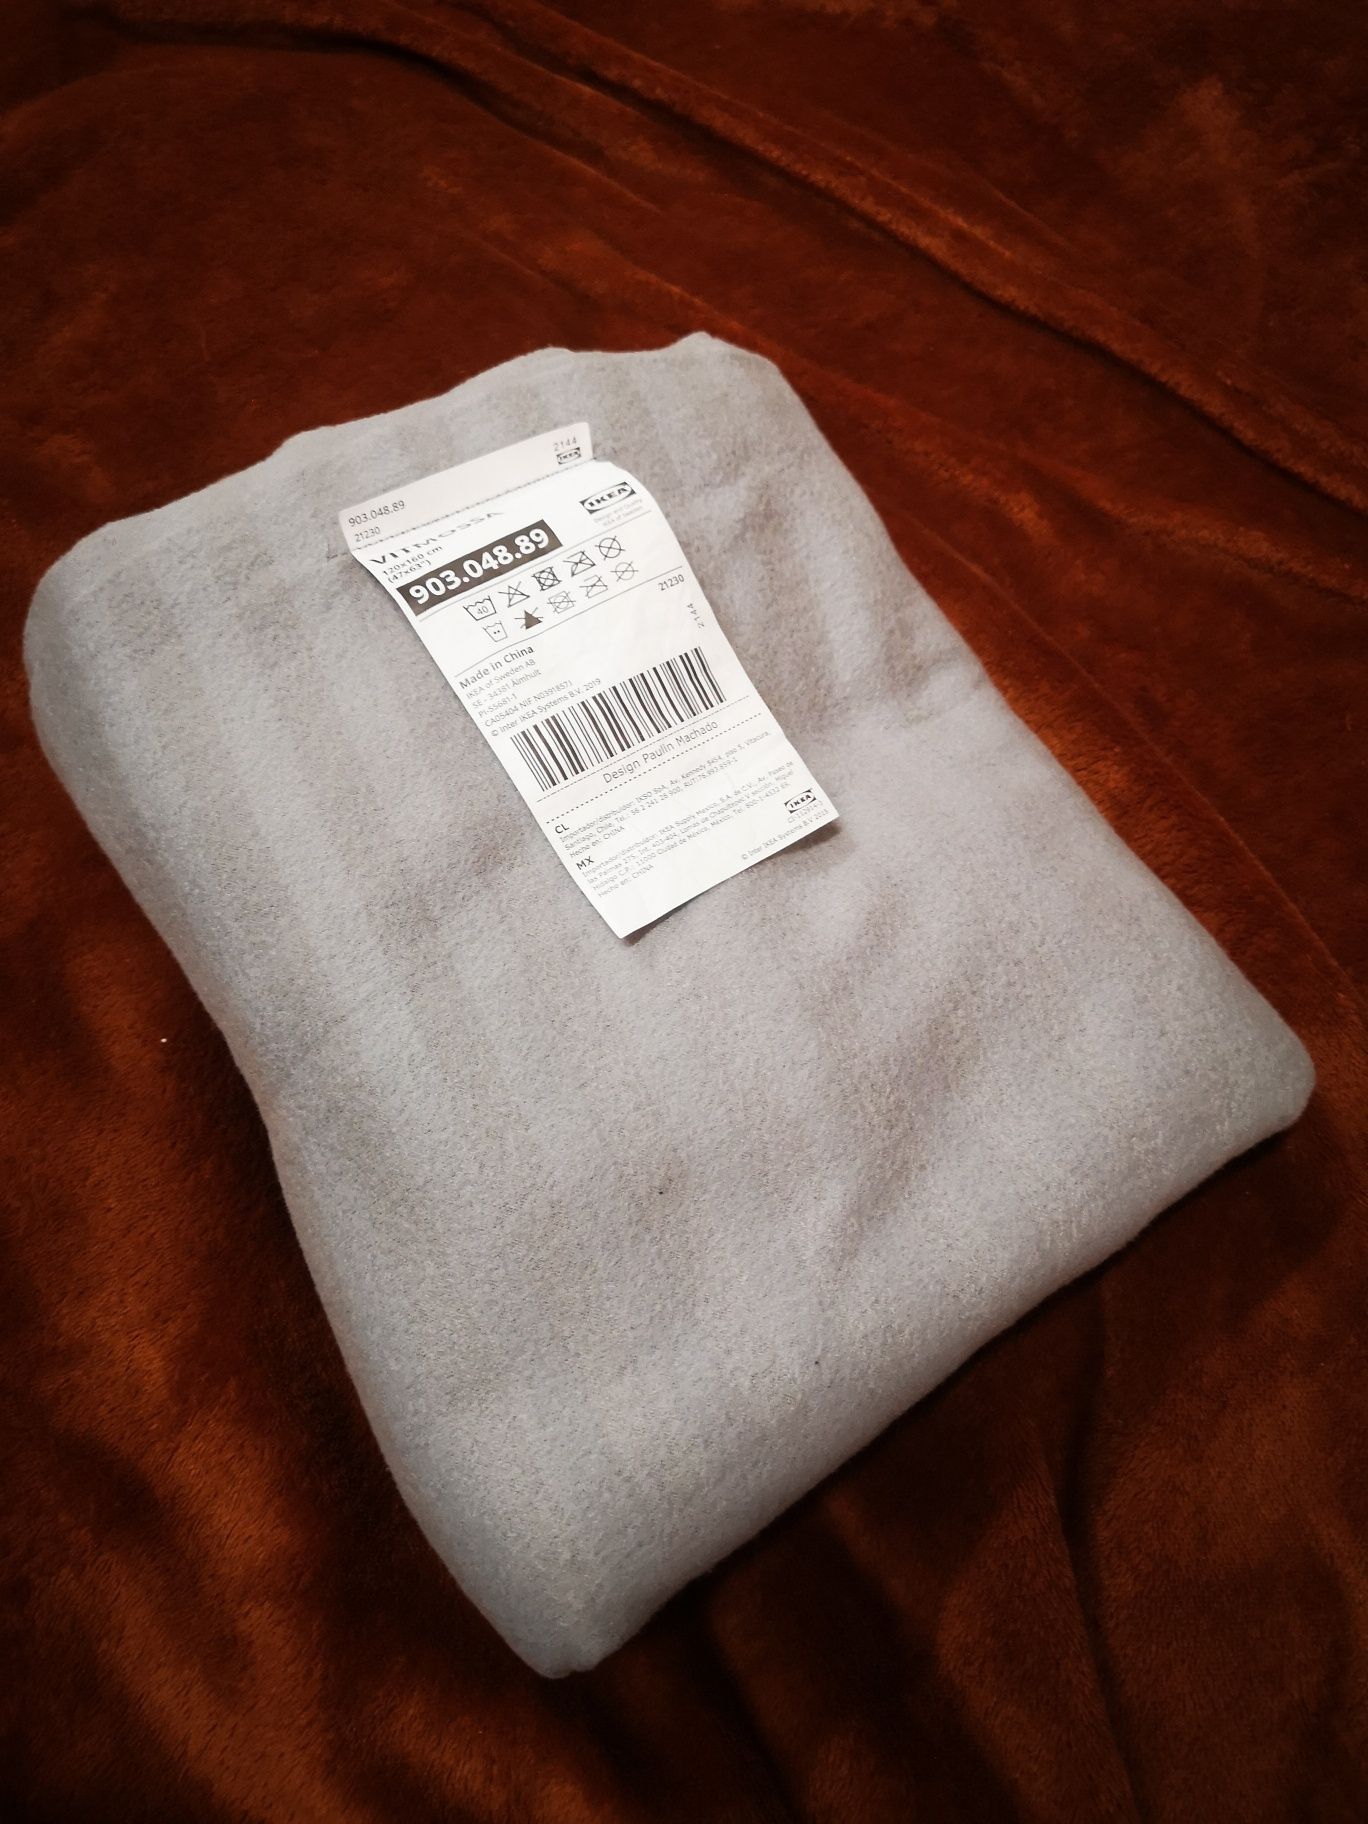 Сірий Плед дитячий ікеа, серое покрывало Ikea Vitmossa код903.048.89